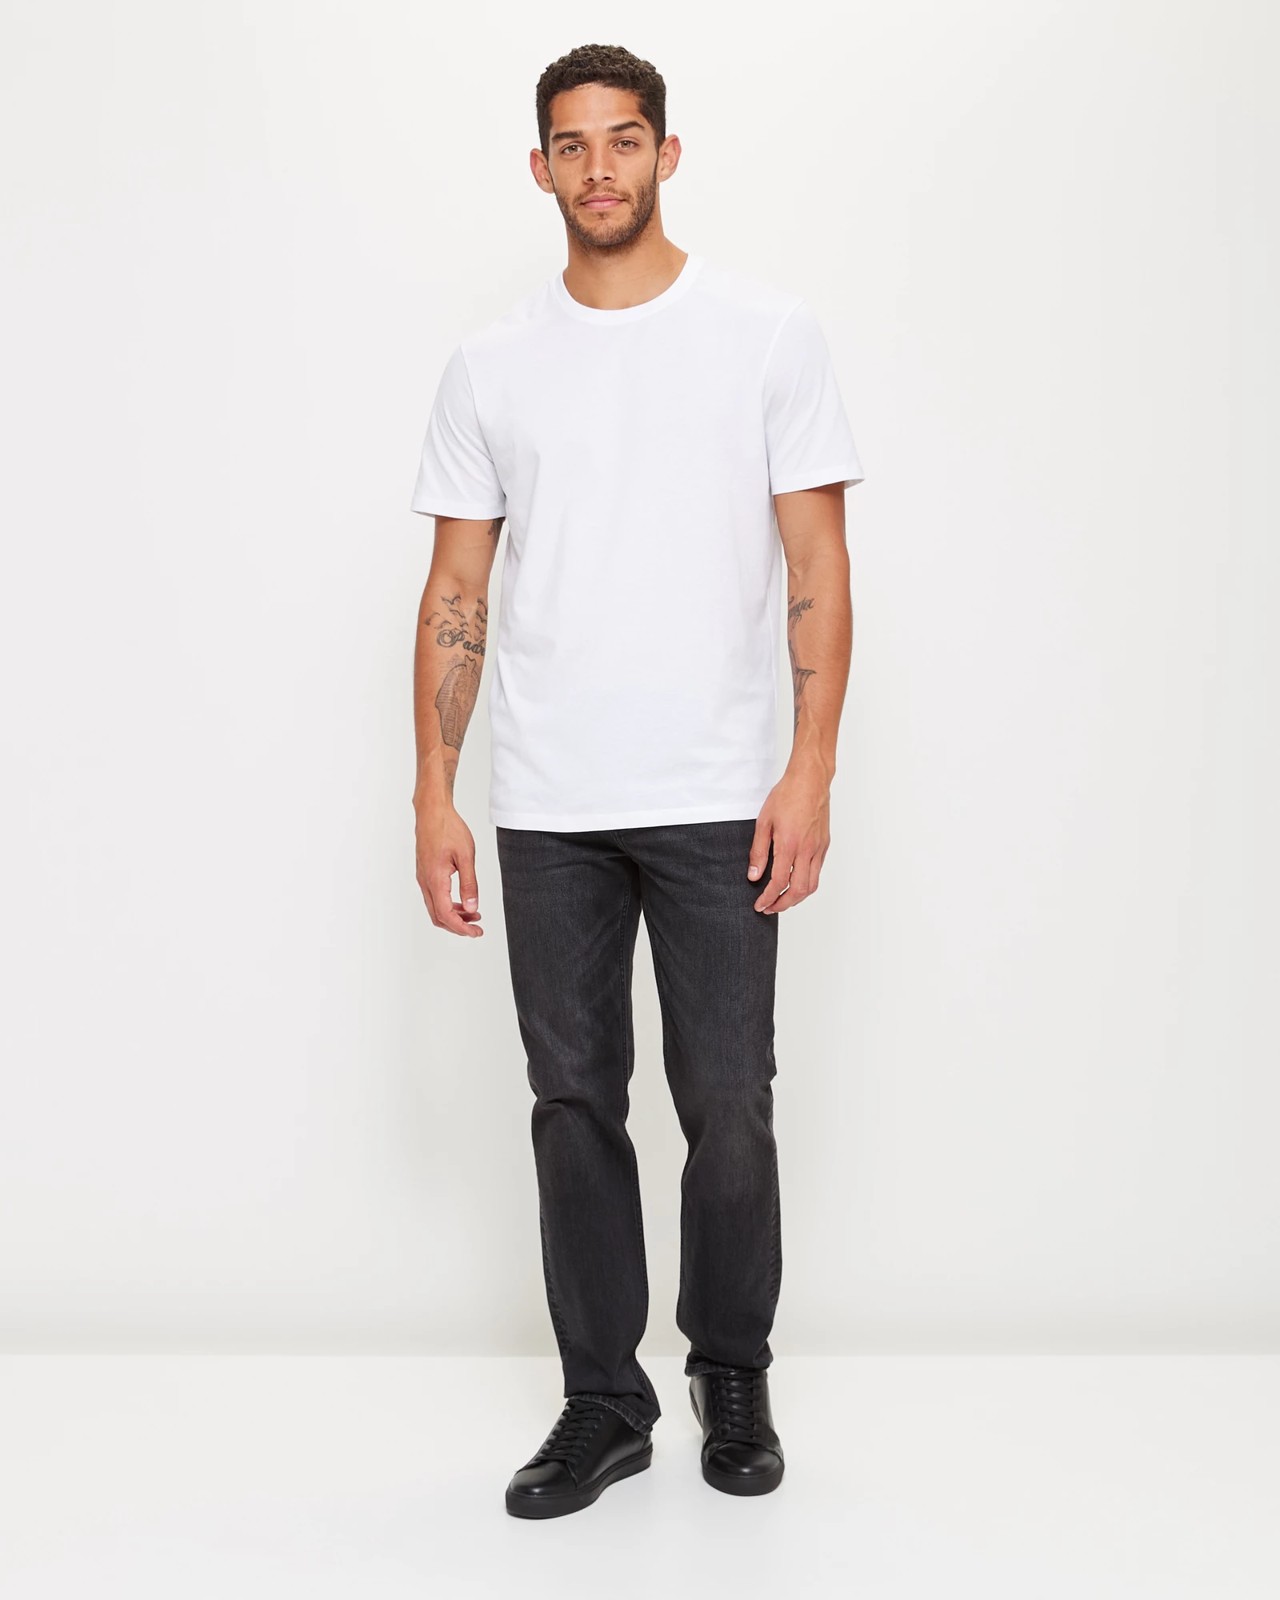 Australian Cotton T-Shirt - White | Target Australia